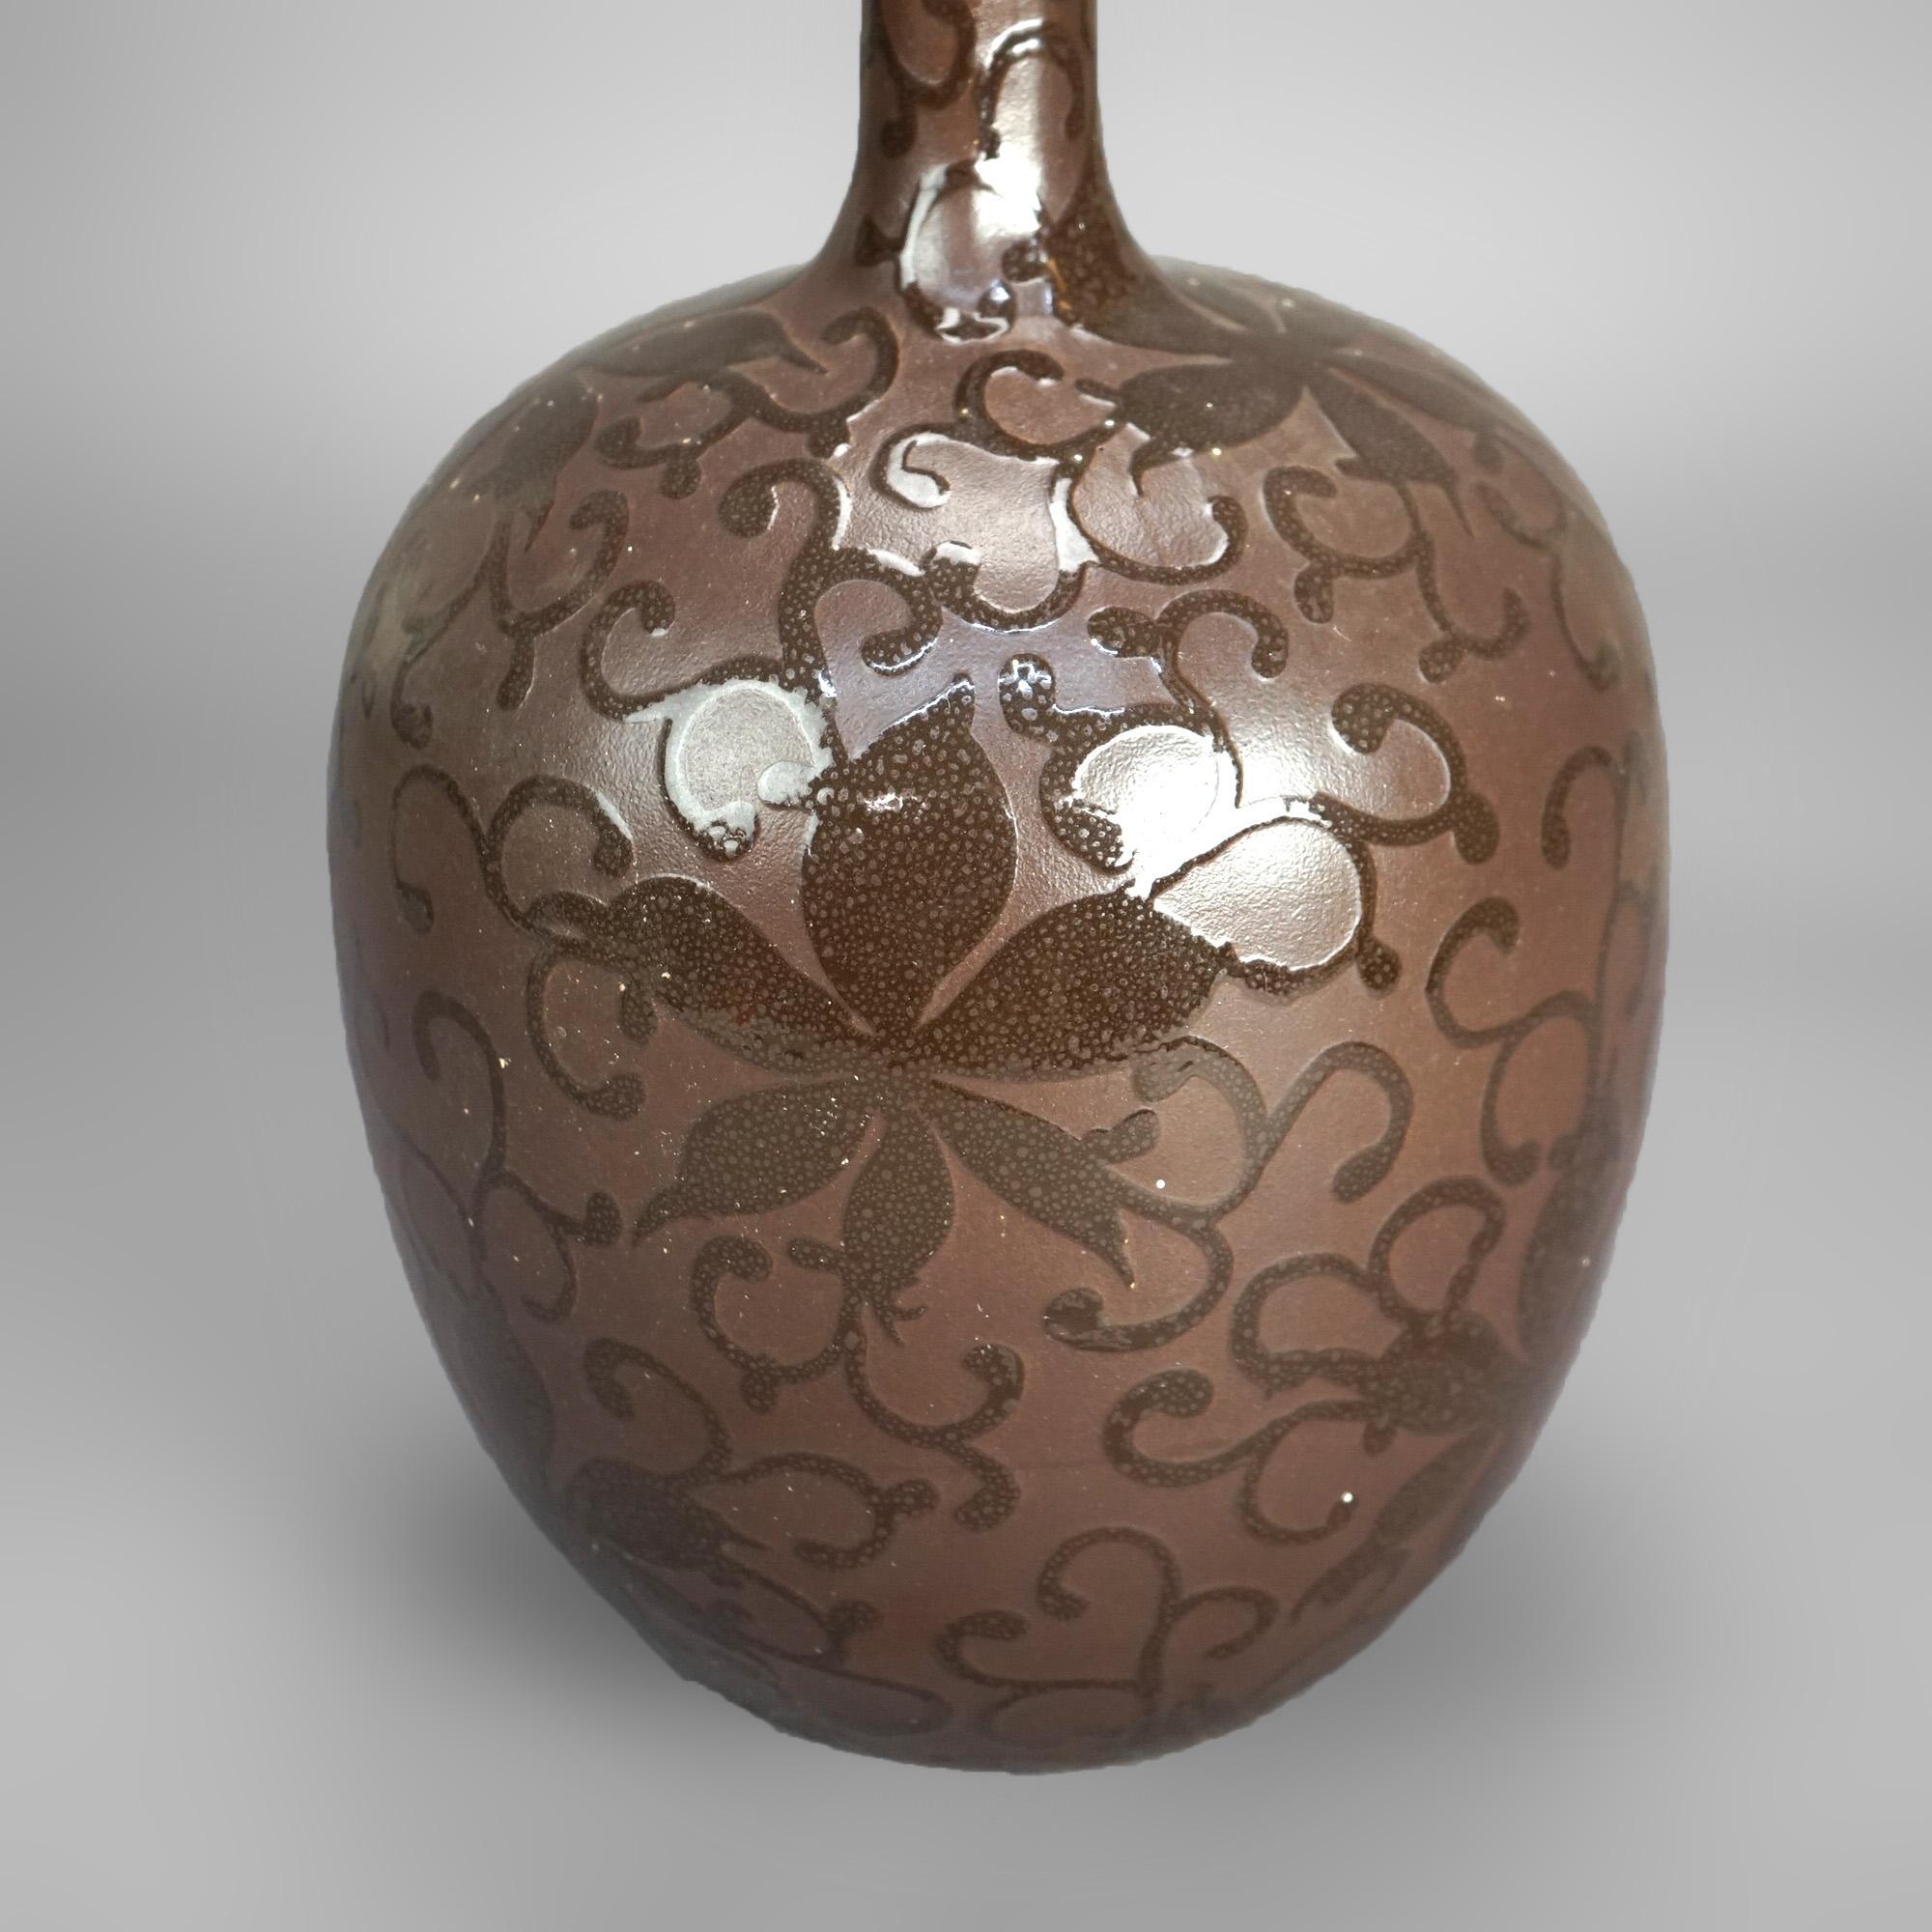 Antique American Arts & Crafts Cut Back Floral Art Pottery Vase in the Manner of Weller or Roseville c1930

Measures- 17.25''H x 9''W x 9''D